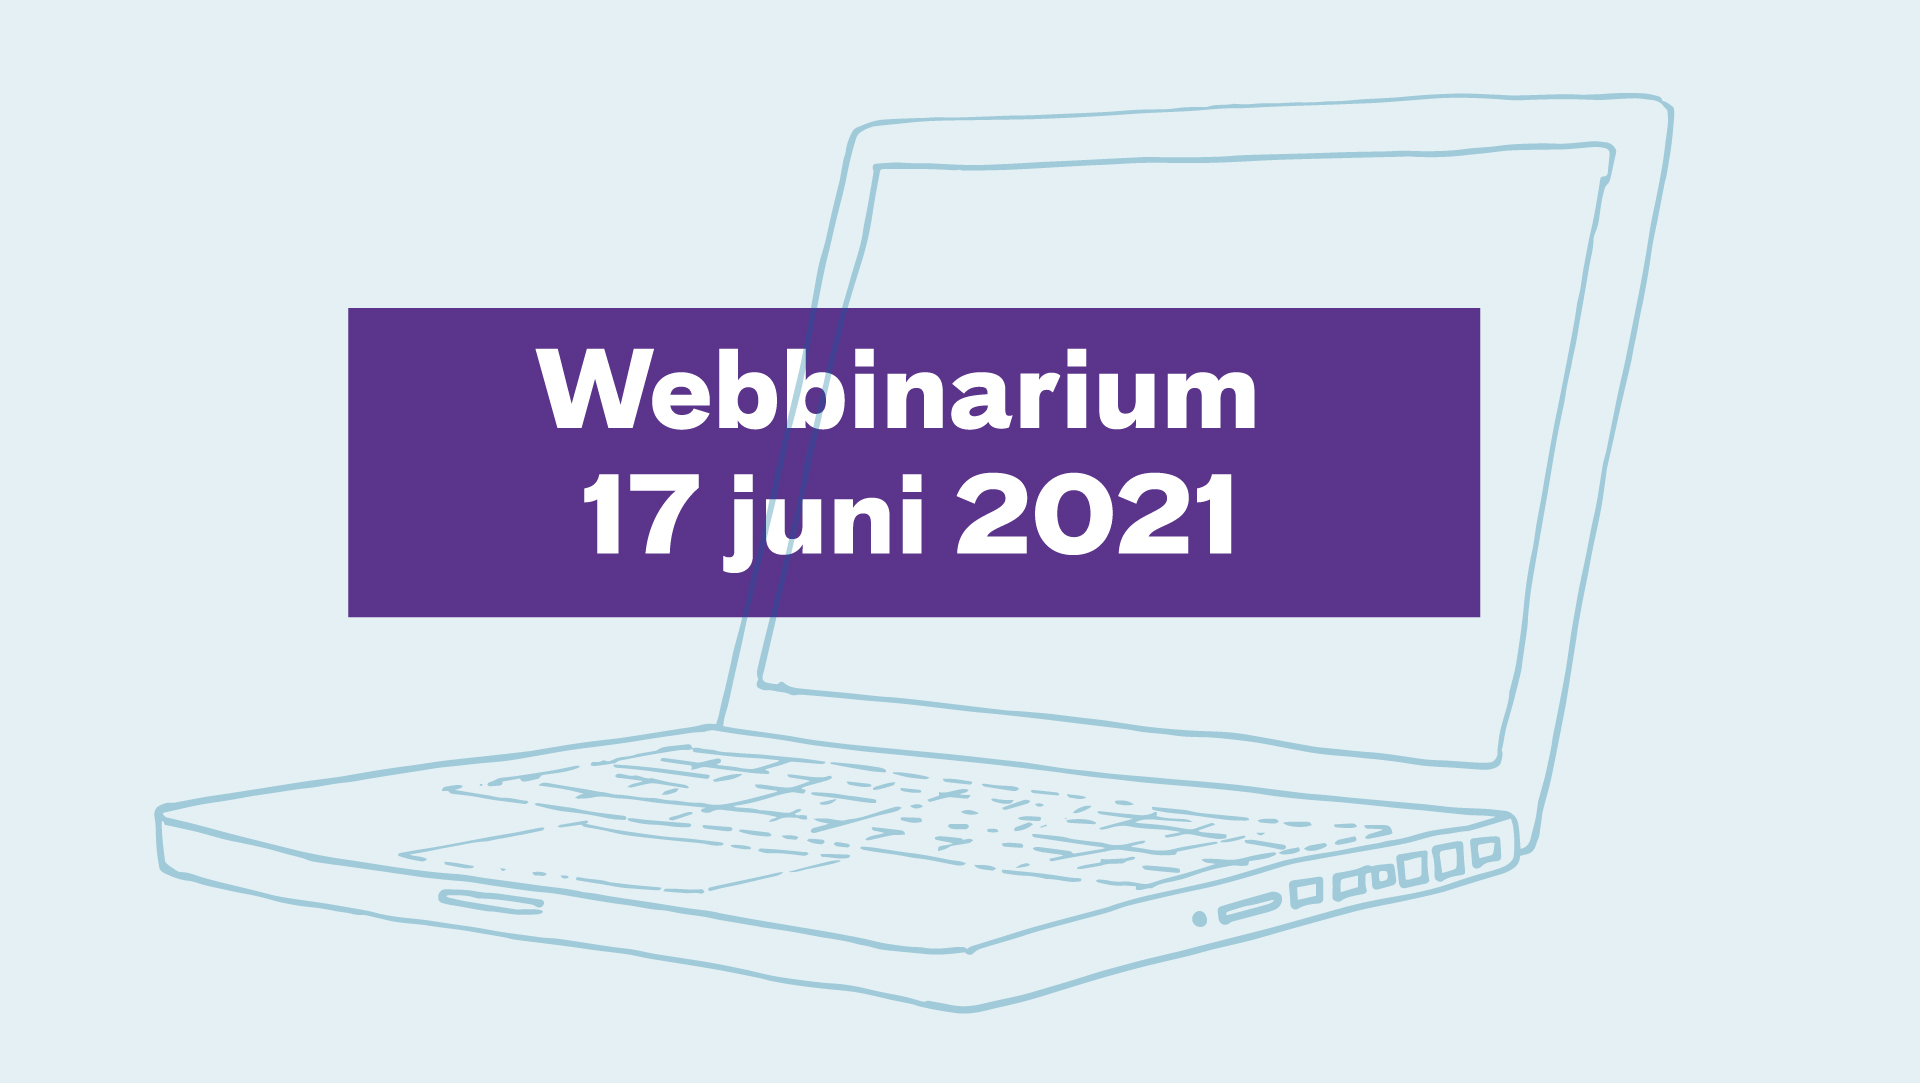 Webbinarium 17 juni 2021